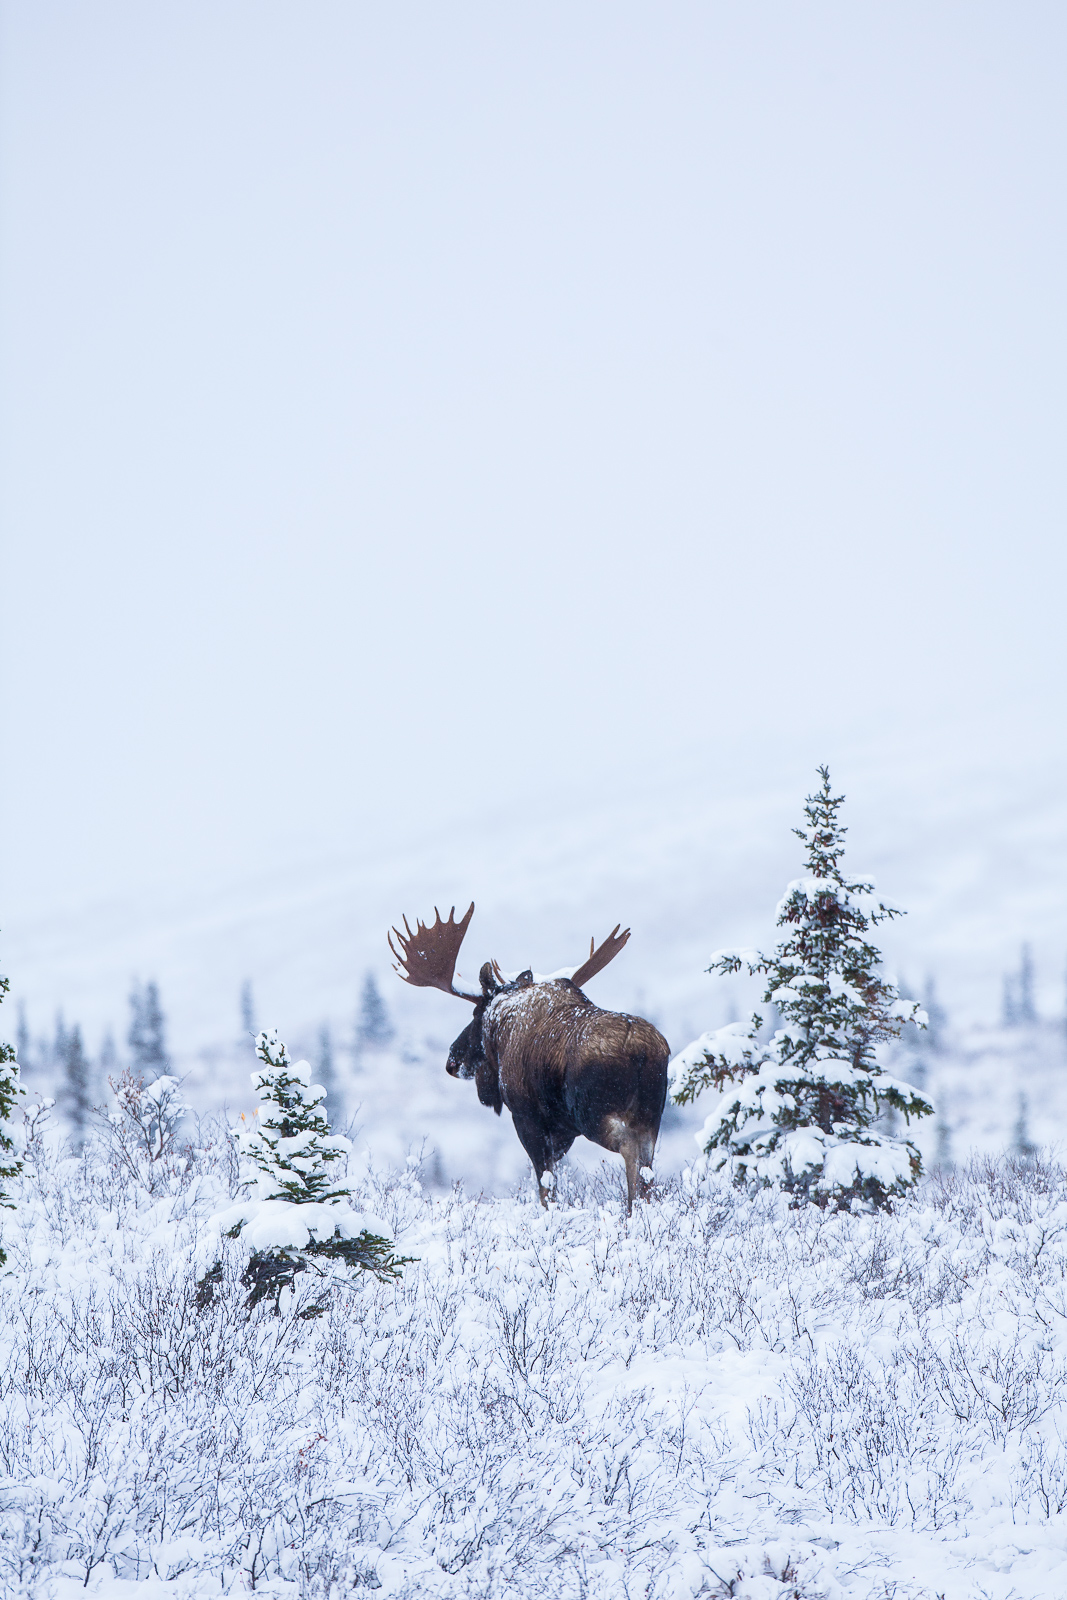 Moose walking tall in the fresh autumn snow.